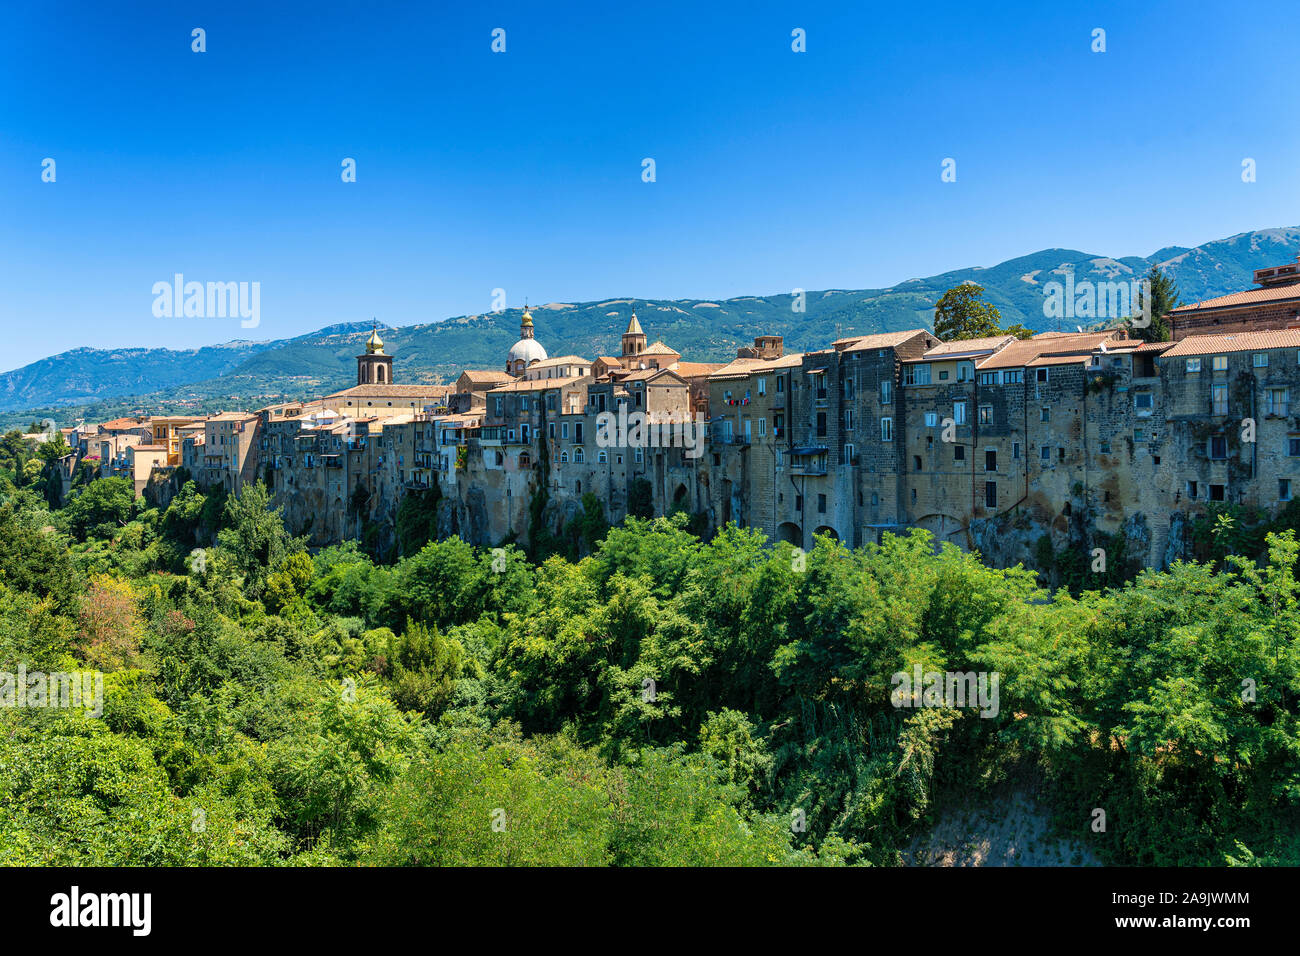 Sant Agata De Goti, Caserta, Campania, Italy: historic town Stock Photo